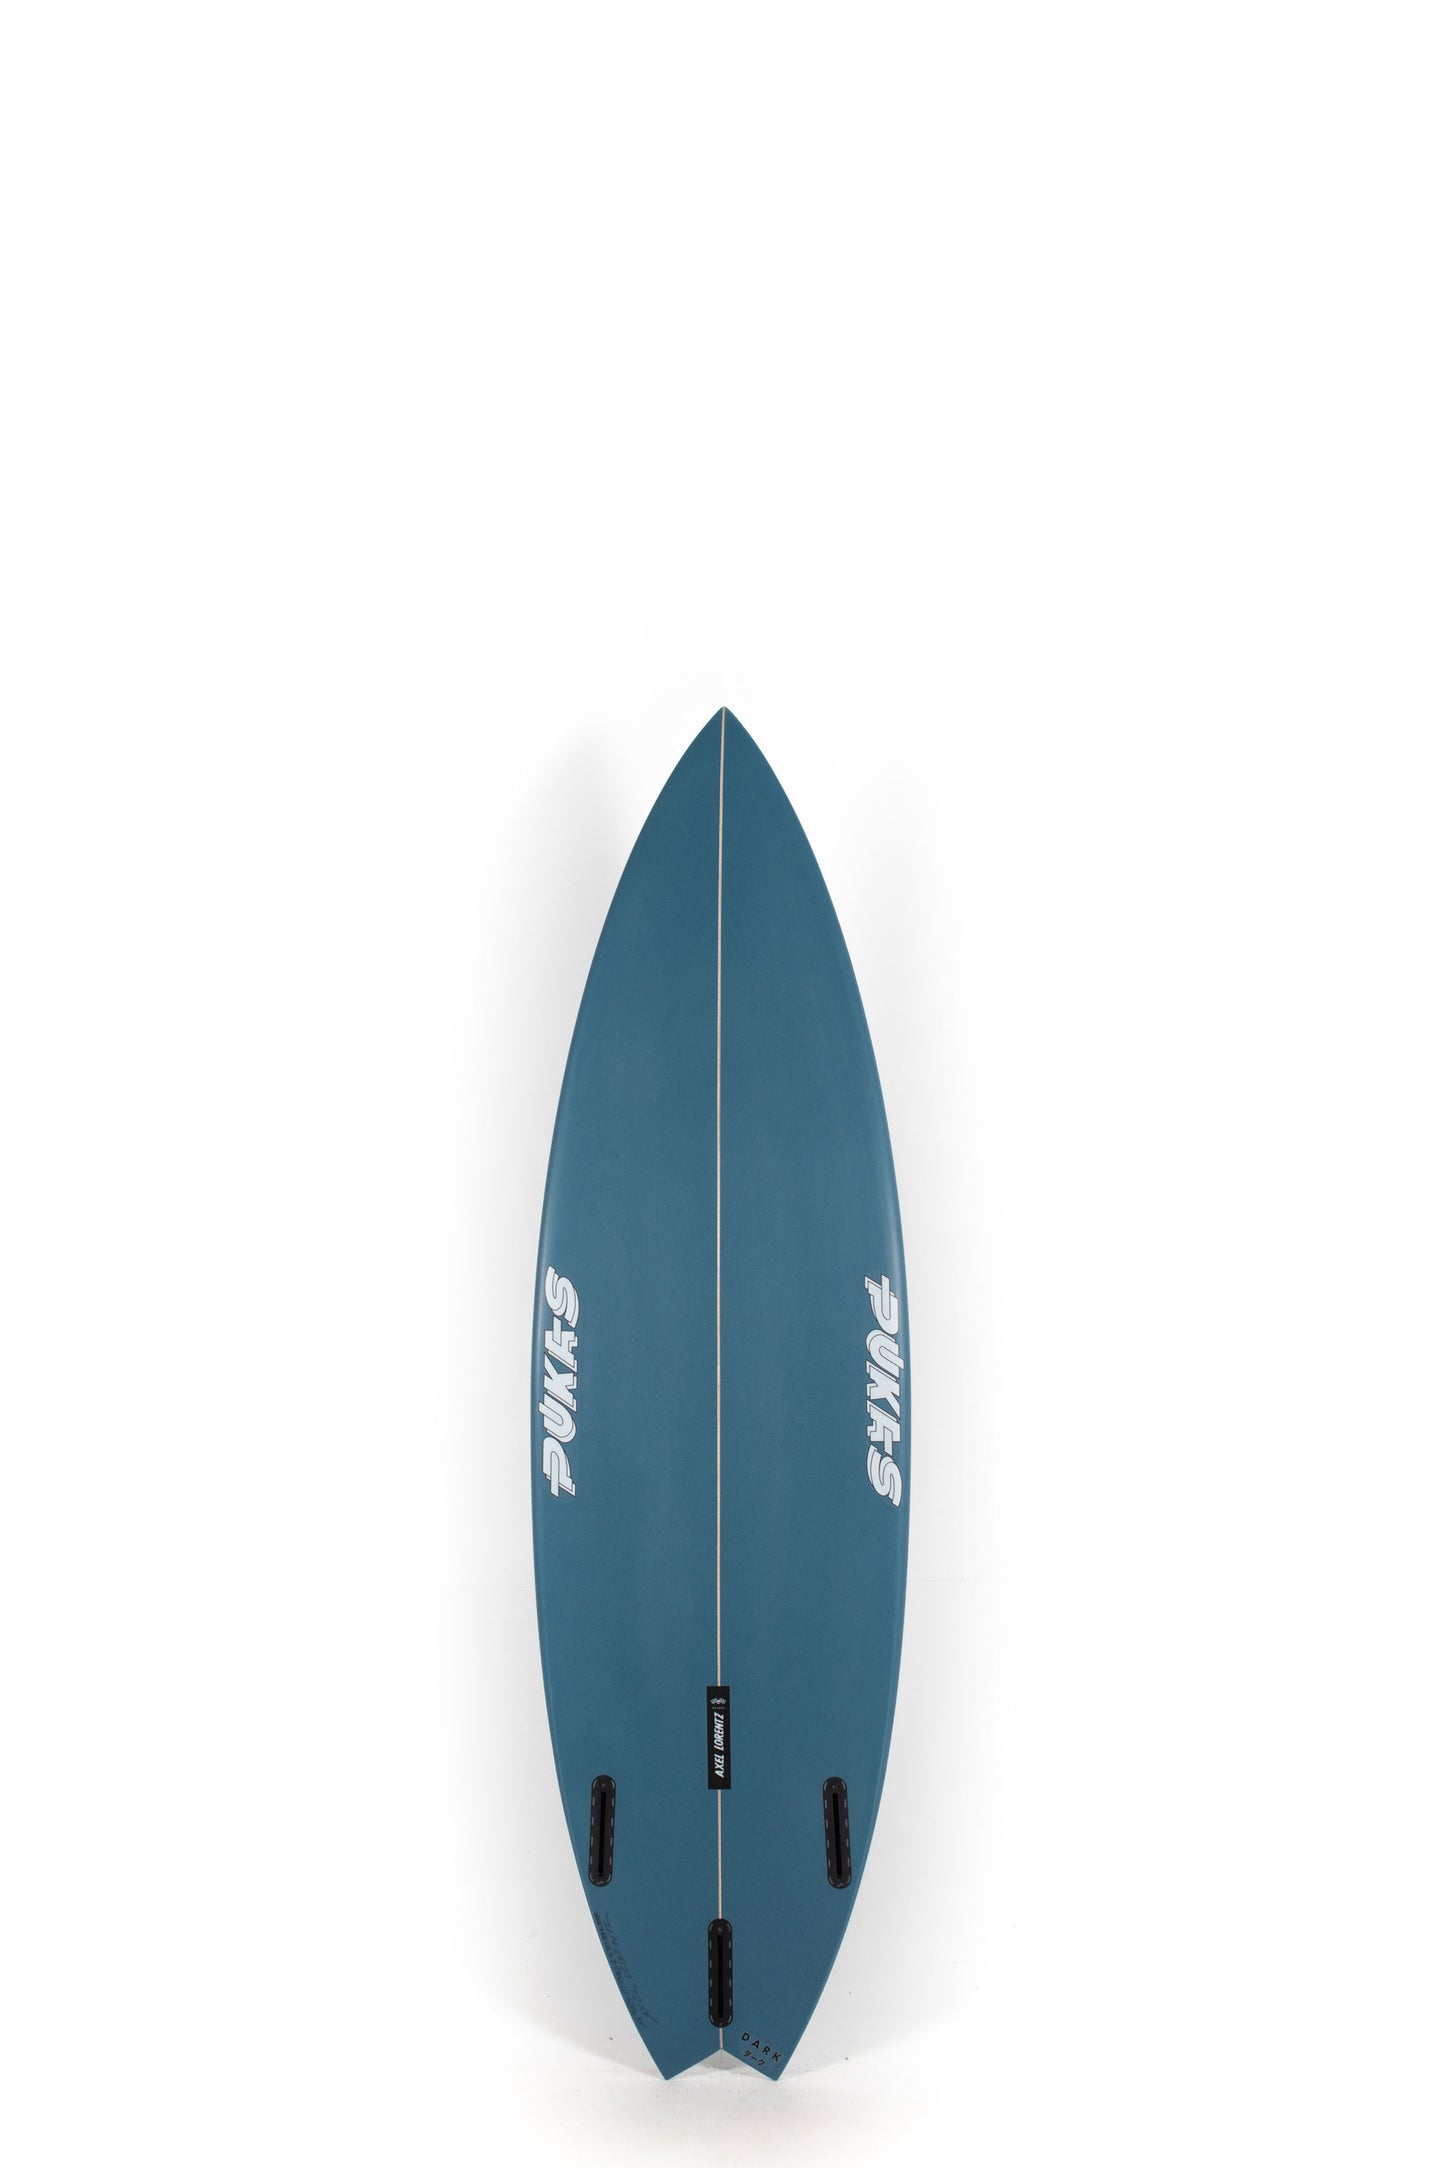 Pukas Surf Shop - Pukas Surfboard - DARK by Axel Lorentz - 6’1” x 19,63 x 2,4 - 30,67L - AX09204